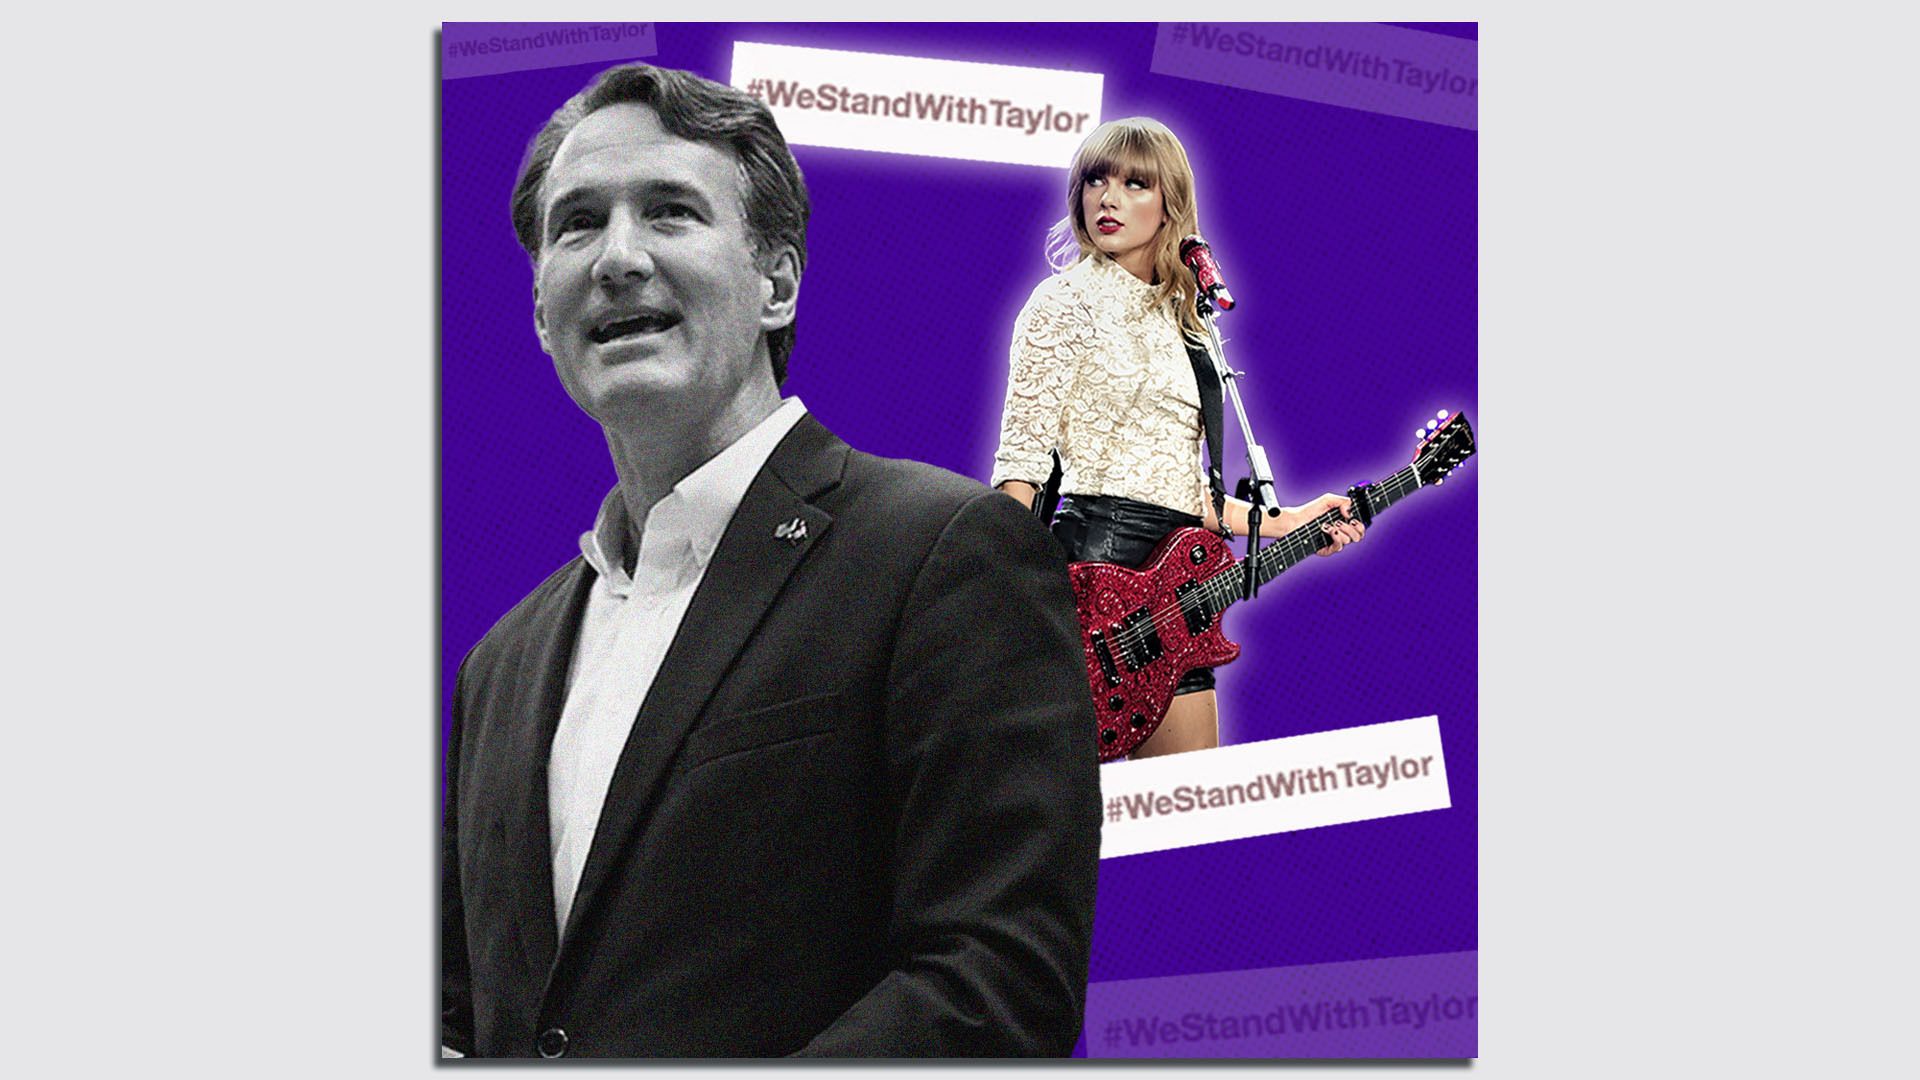 An illustration shows Virginia gubernatorial candidate Glenn Youngkin and musician Taylor Swift.